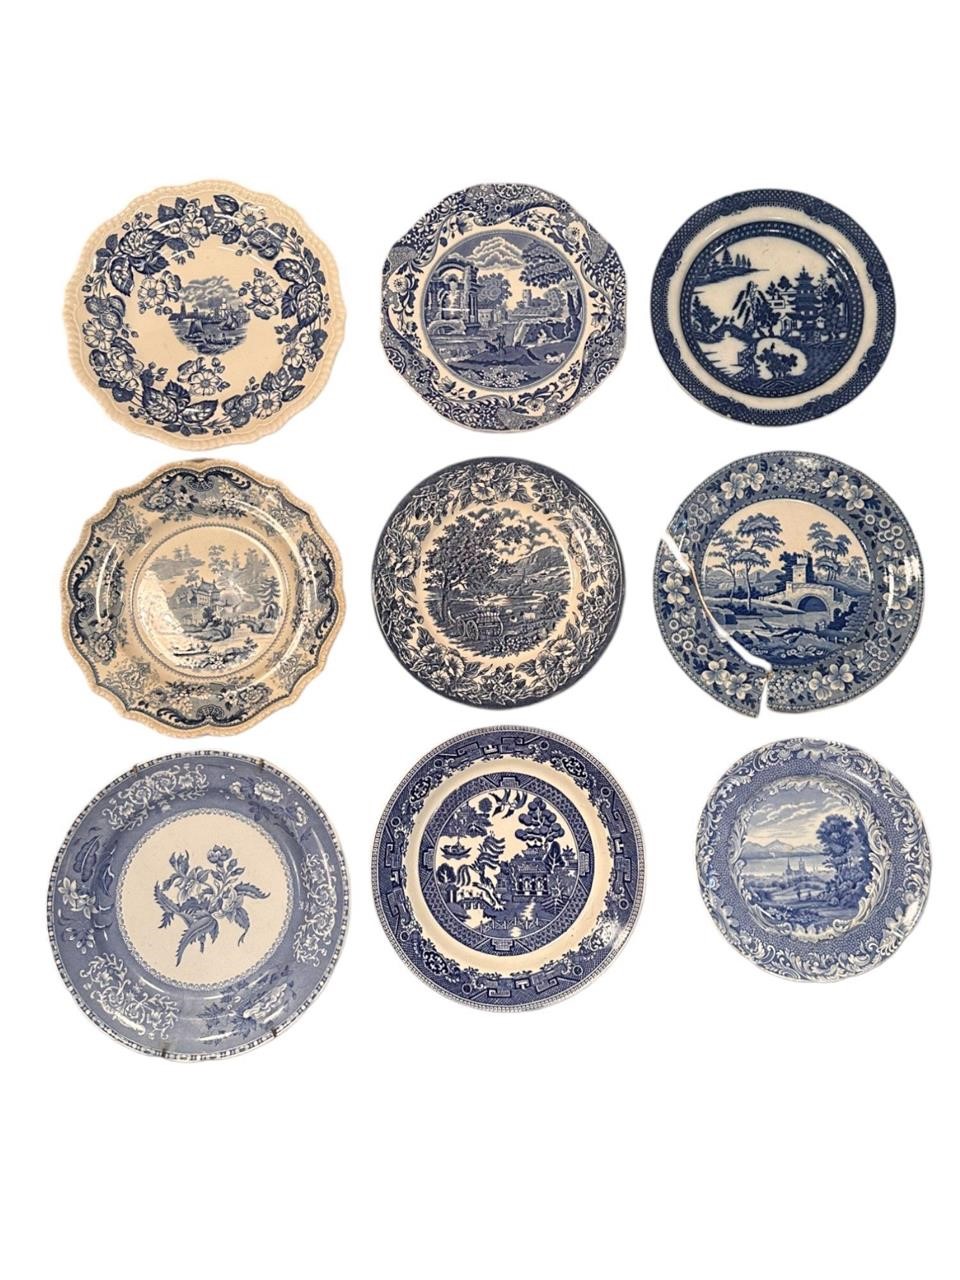 Transferware Blue & White Ceramic Plates, Grp of 9